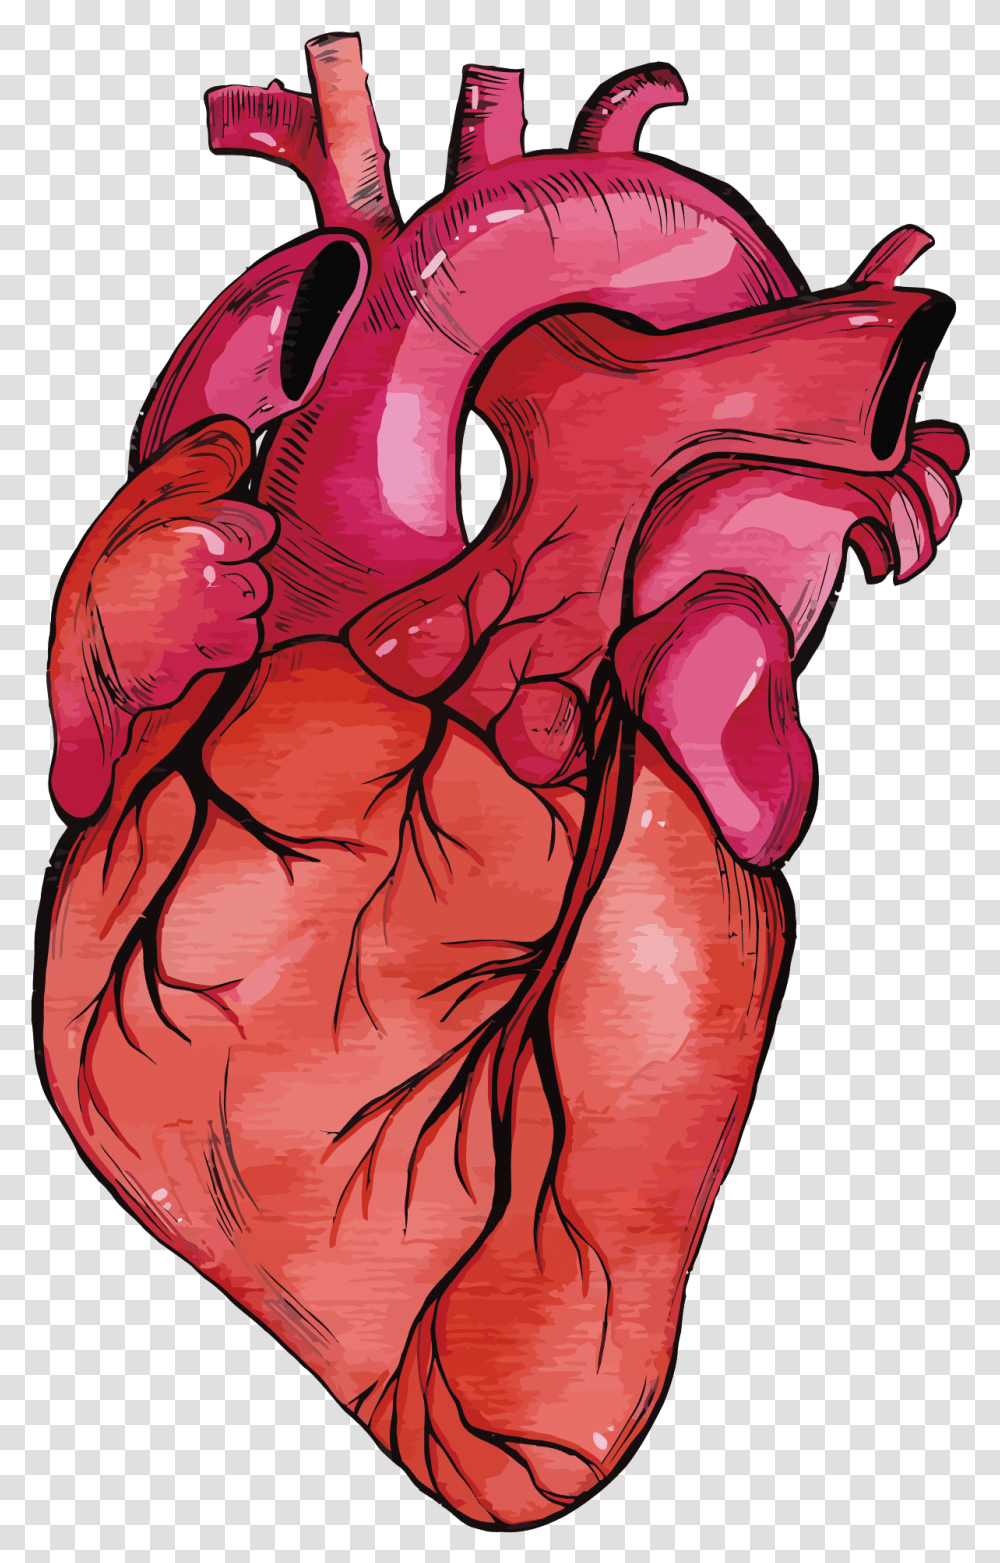 Anatomy Vector Human Heart Clipart Stock Real Heart Background, Plant, Hand, Modern Art, Flower Transparent Png